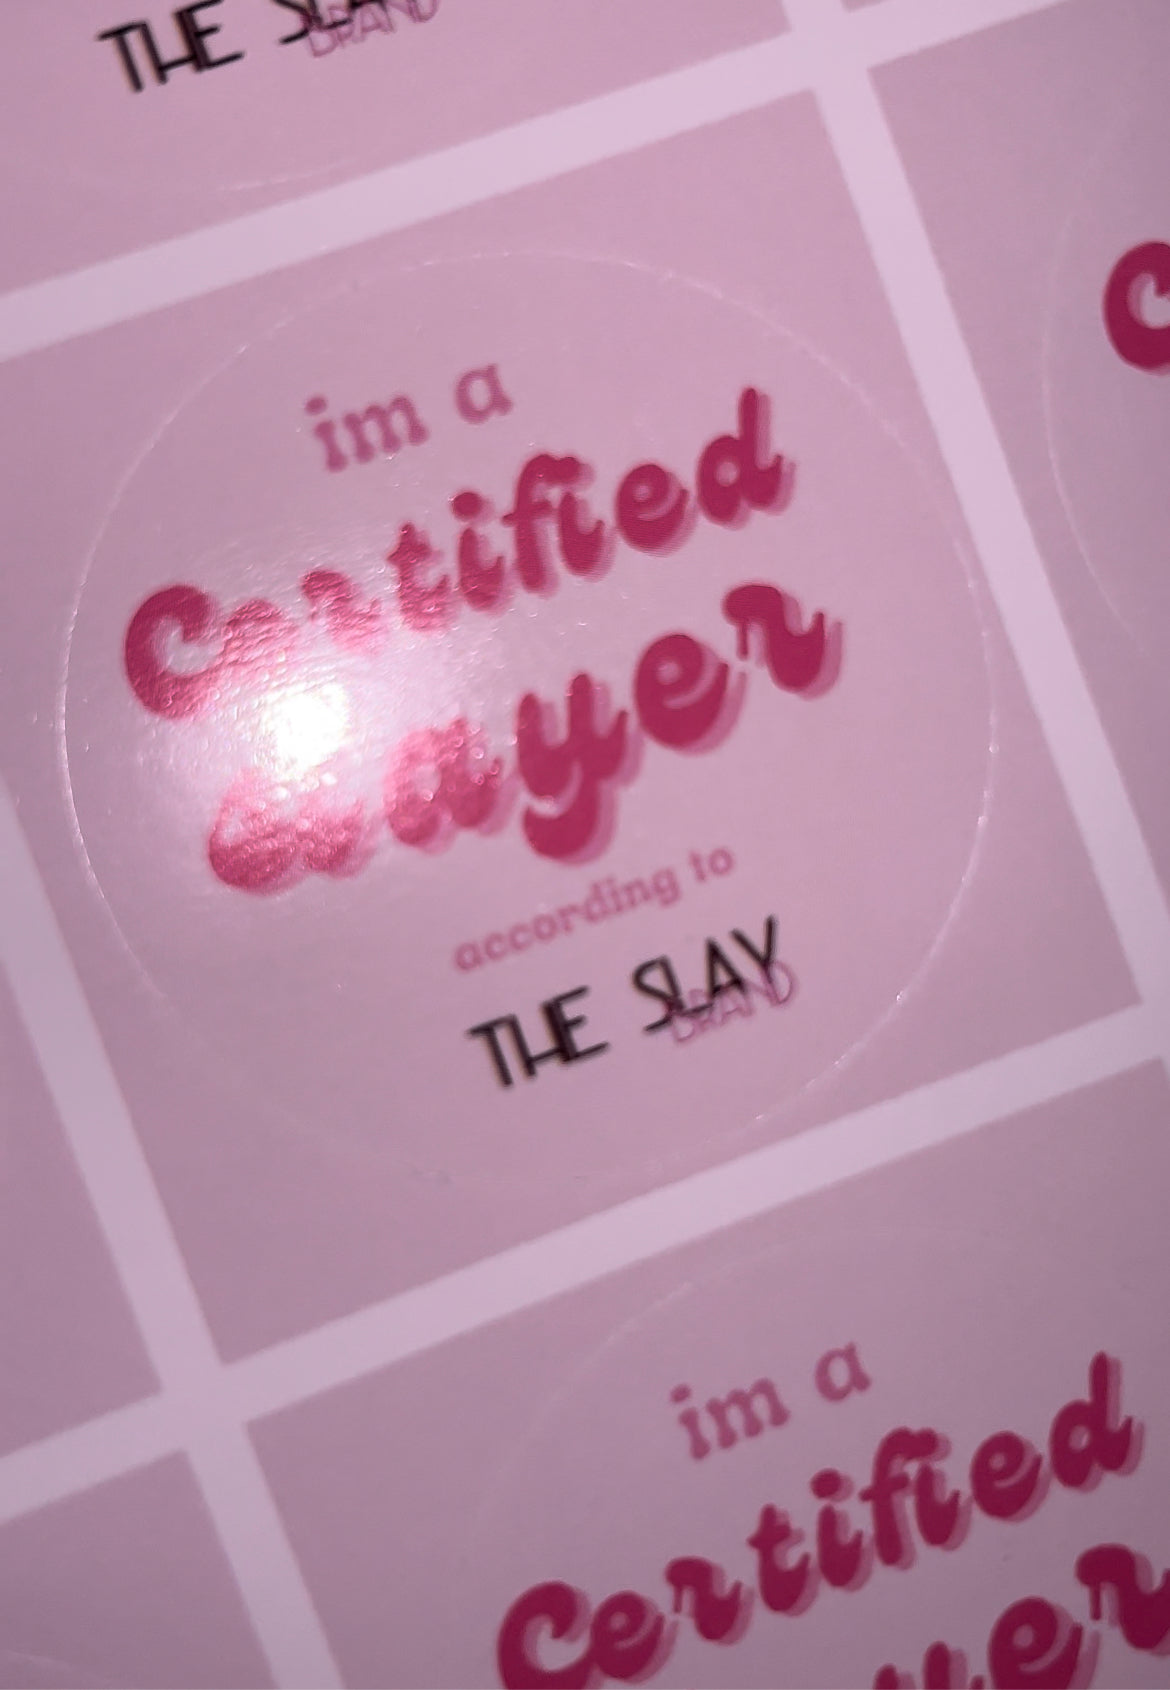 Certified Slayer sticker